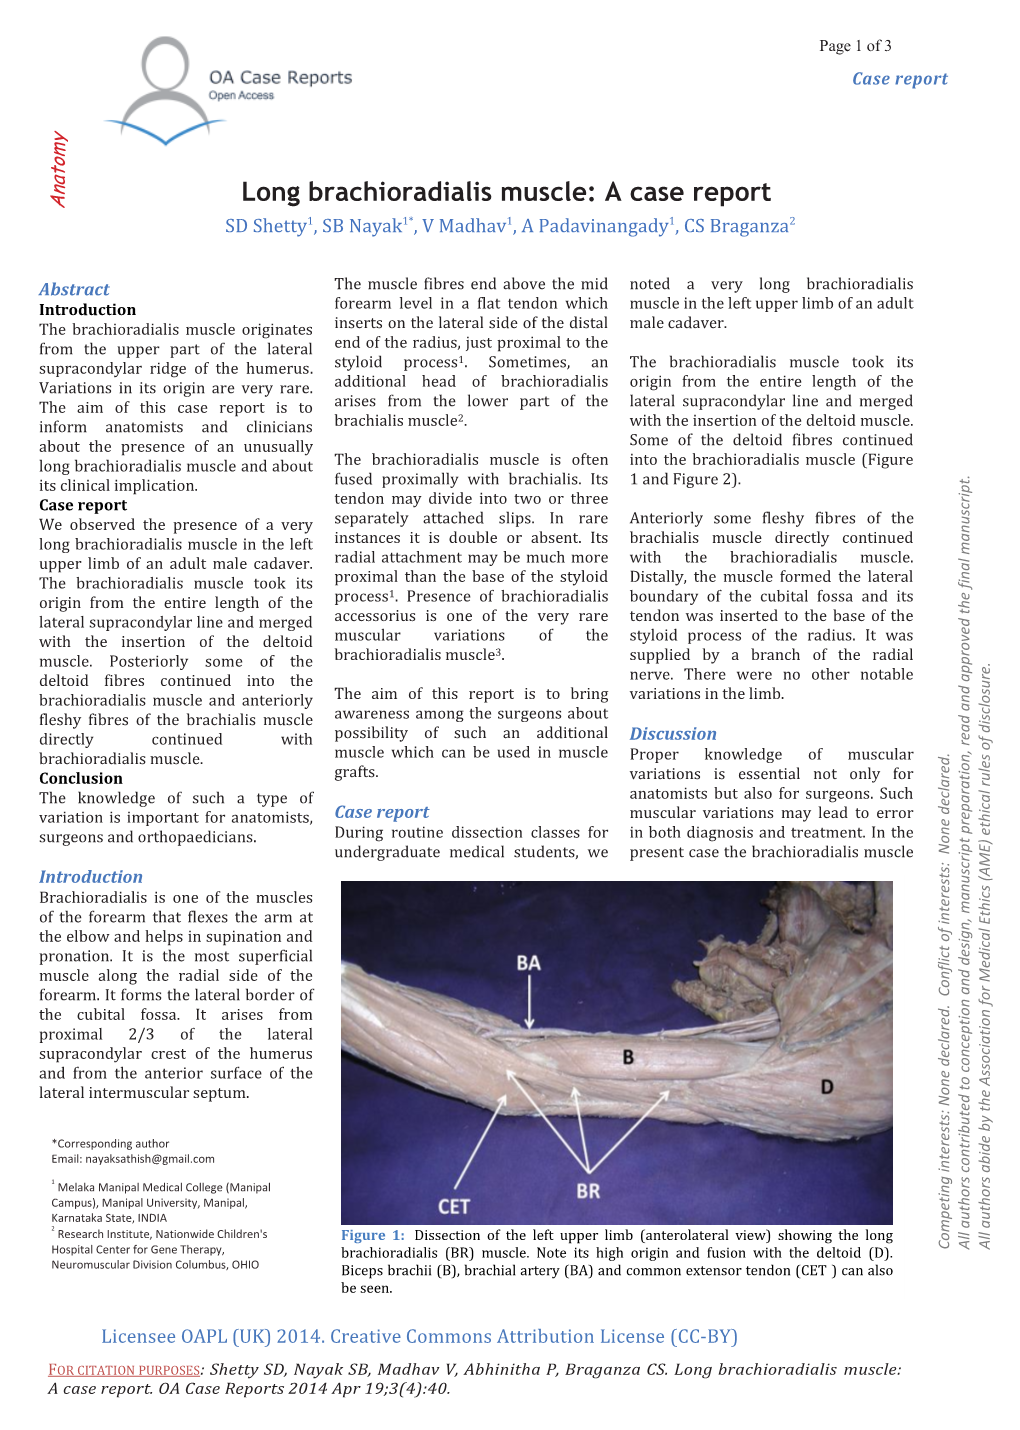 Long Brachioradialis Muscle: a Case Report Anatomy SD Shetty1, SB Nayak1*, V Madhav1, a Padavinangady1, CS Braganza2